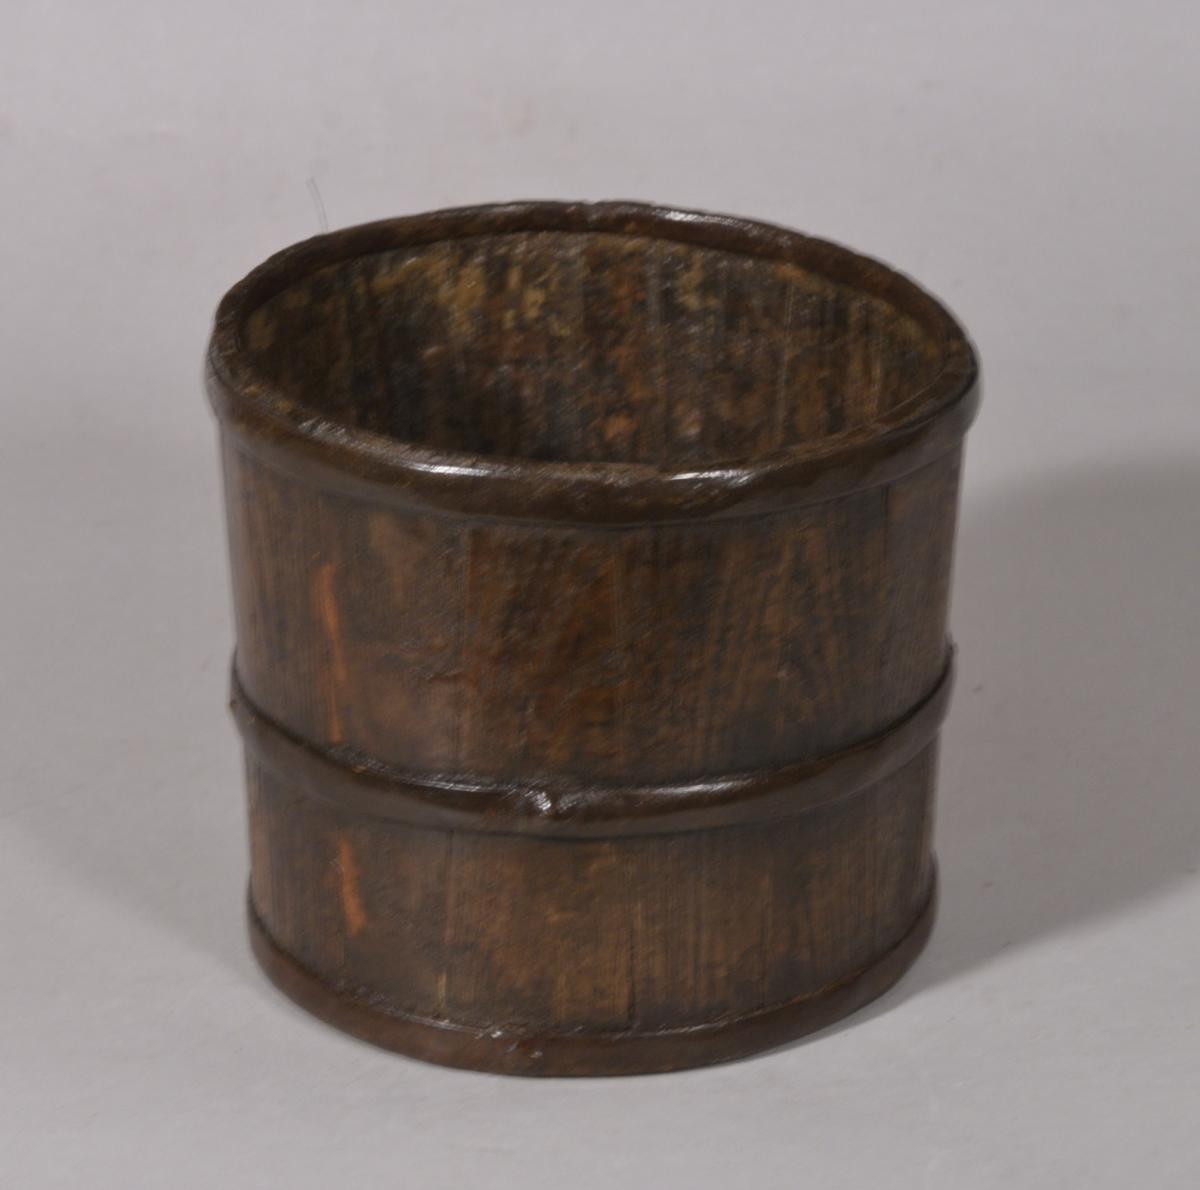 S/6031 Antique Treen Early 19th Century Iron Bound Ash Bucket